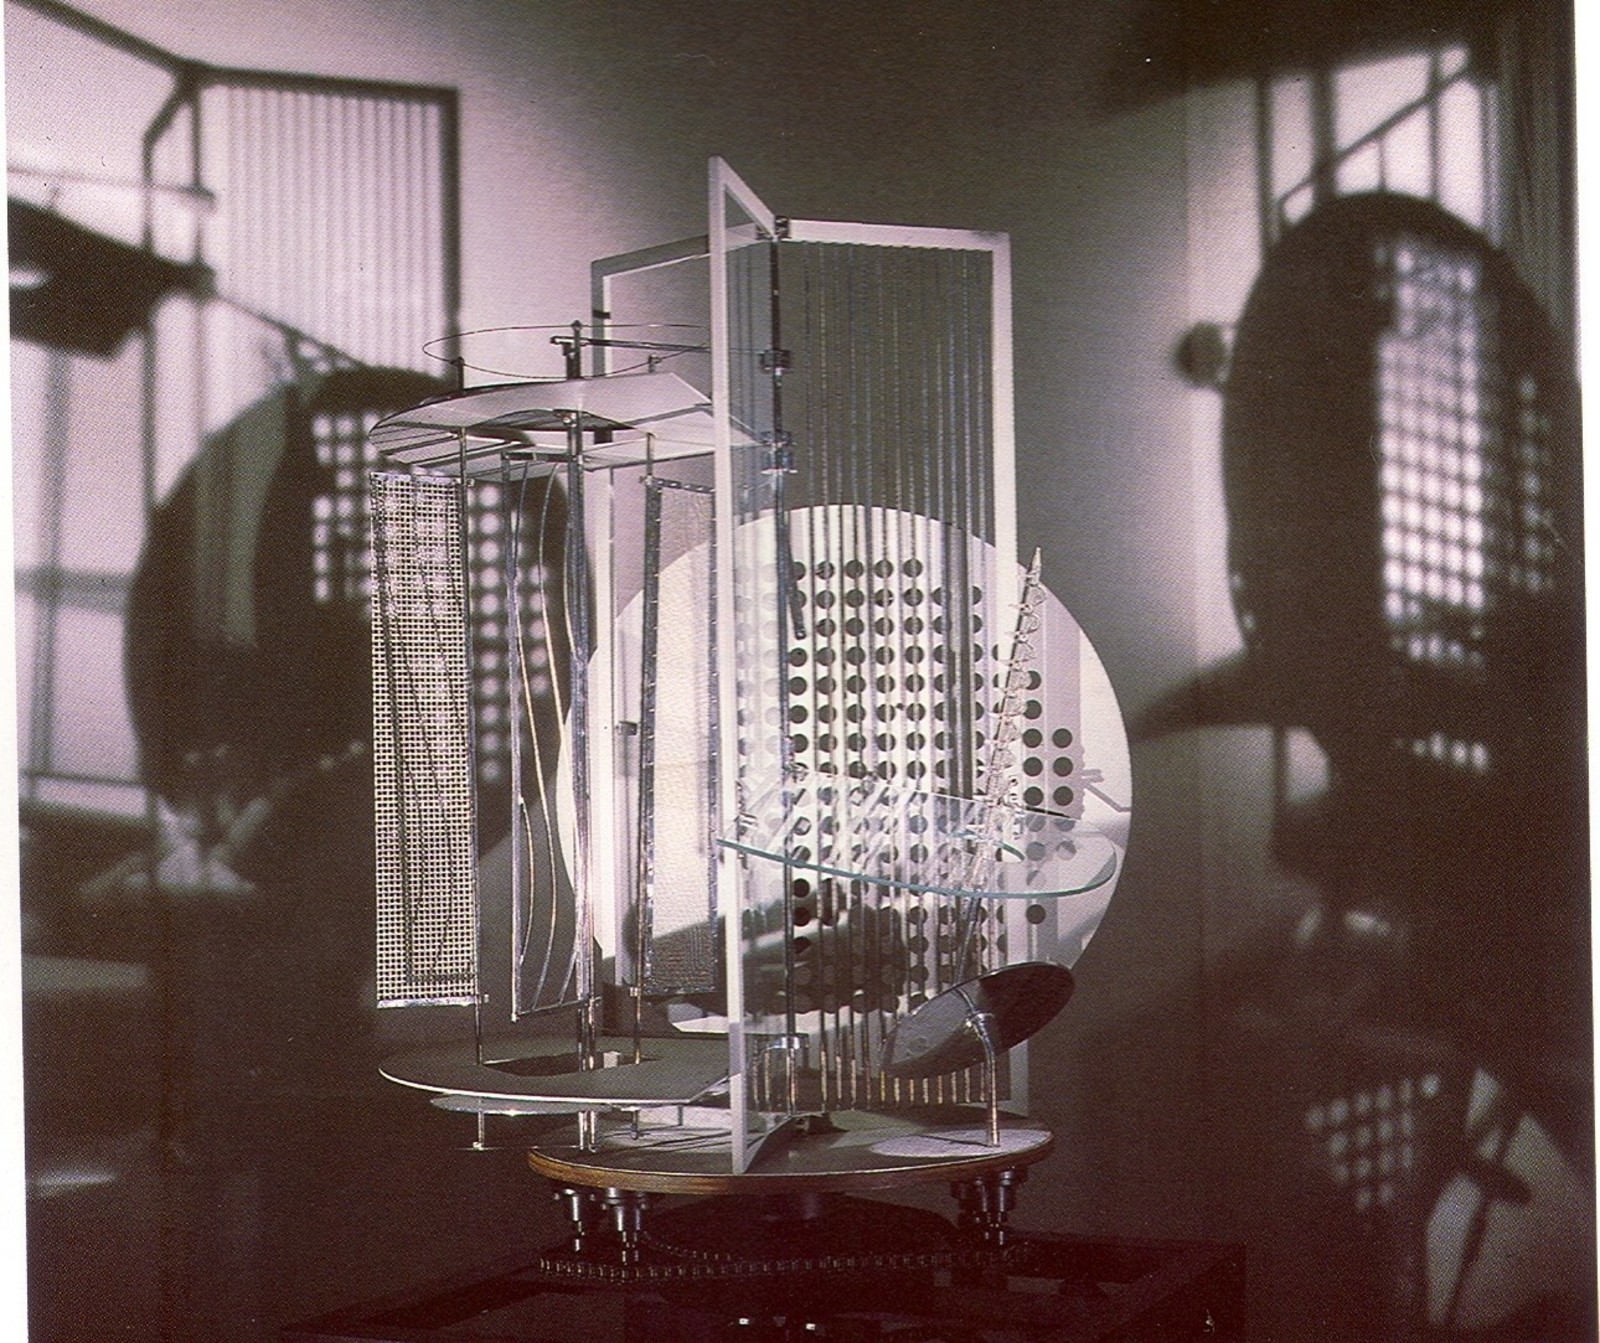 L&aacute;szl&oacute; Moholy-Nagy. Light-Space Modulator. 1930.&nbsp;